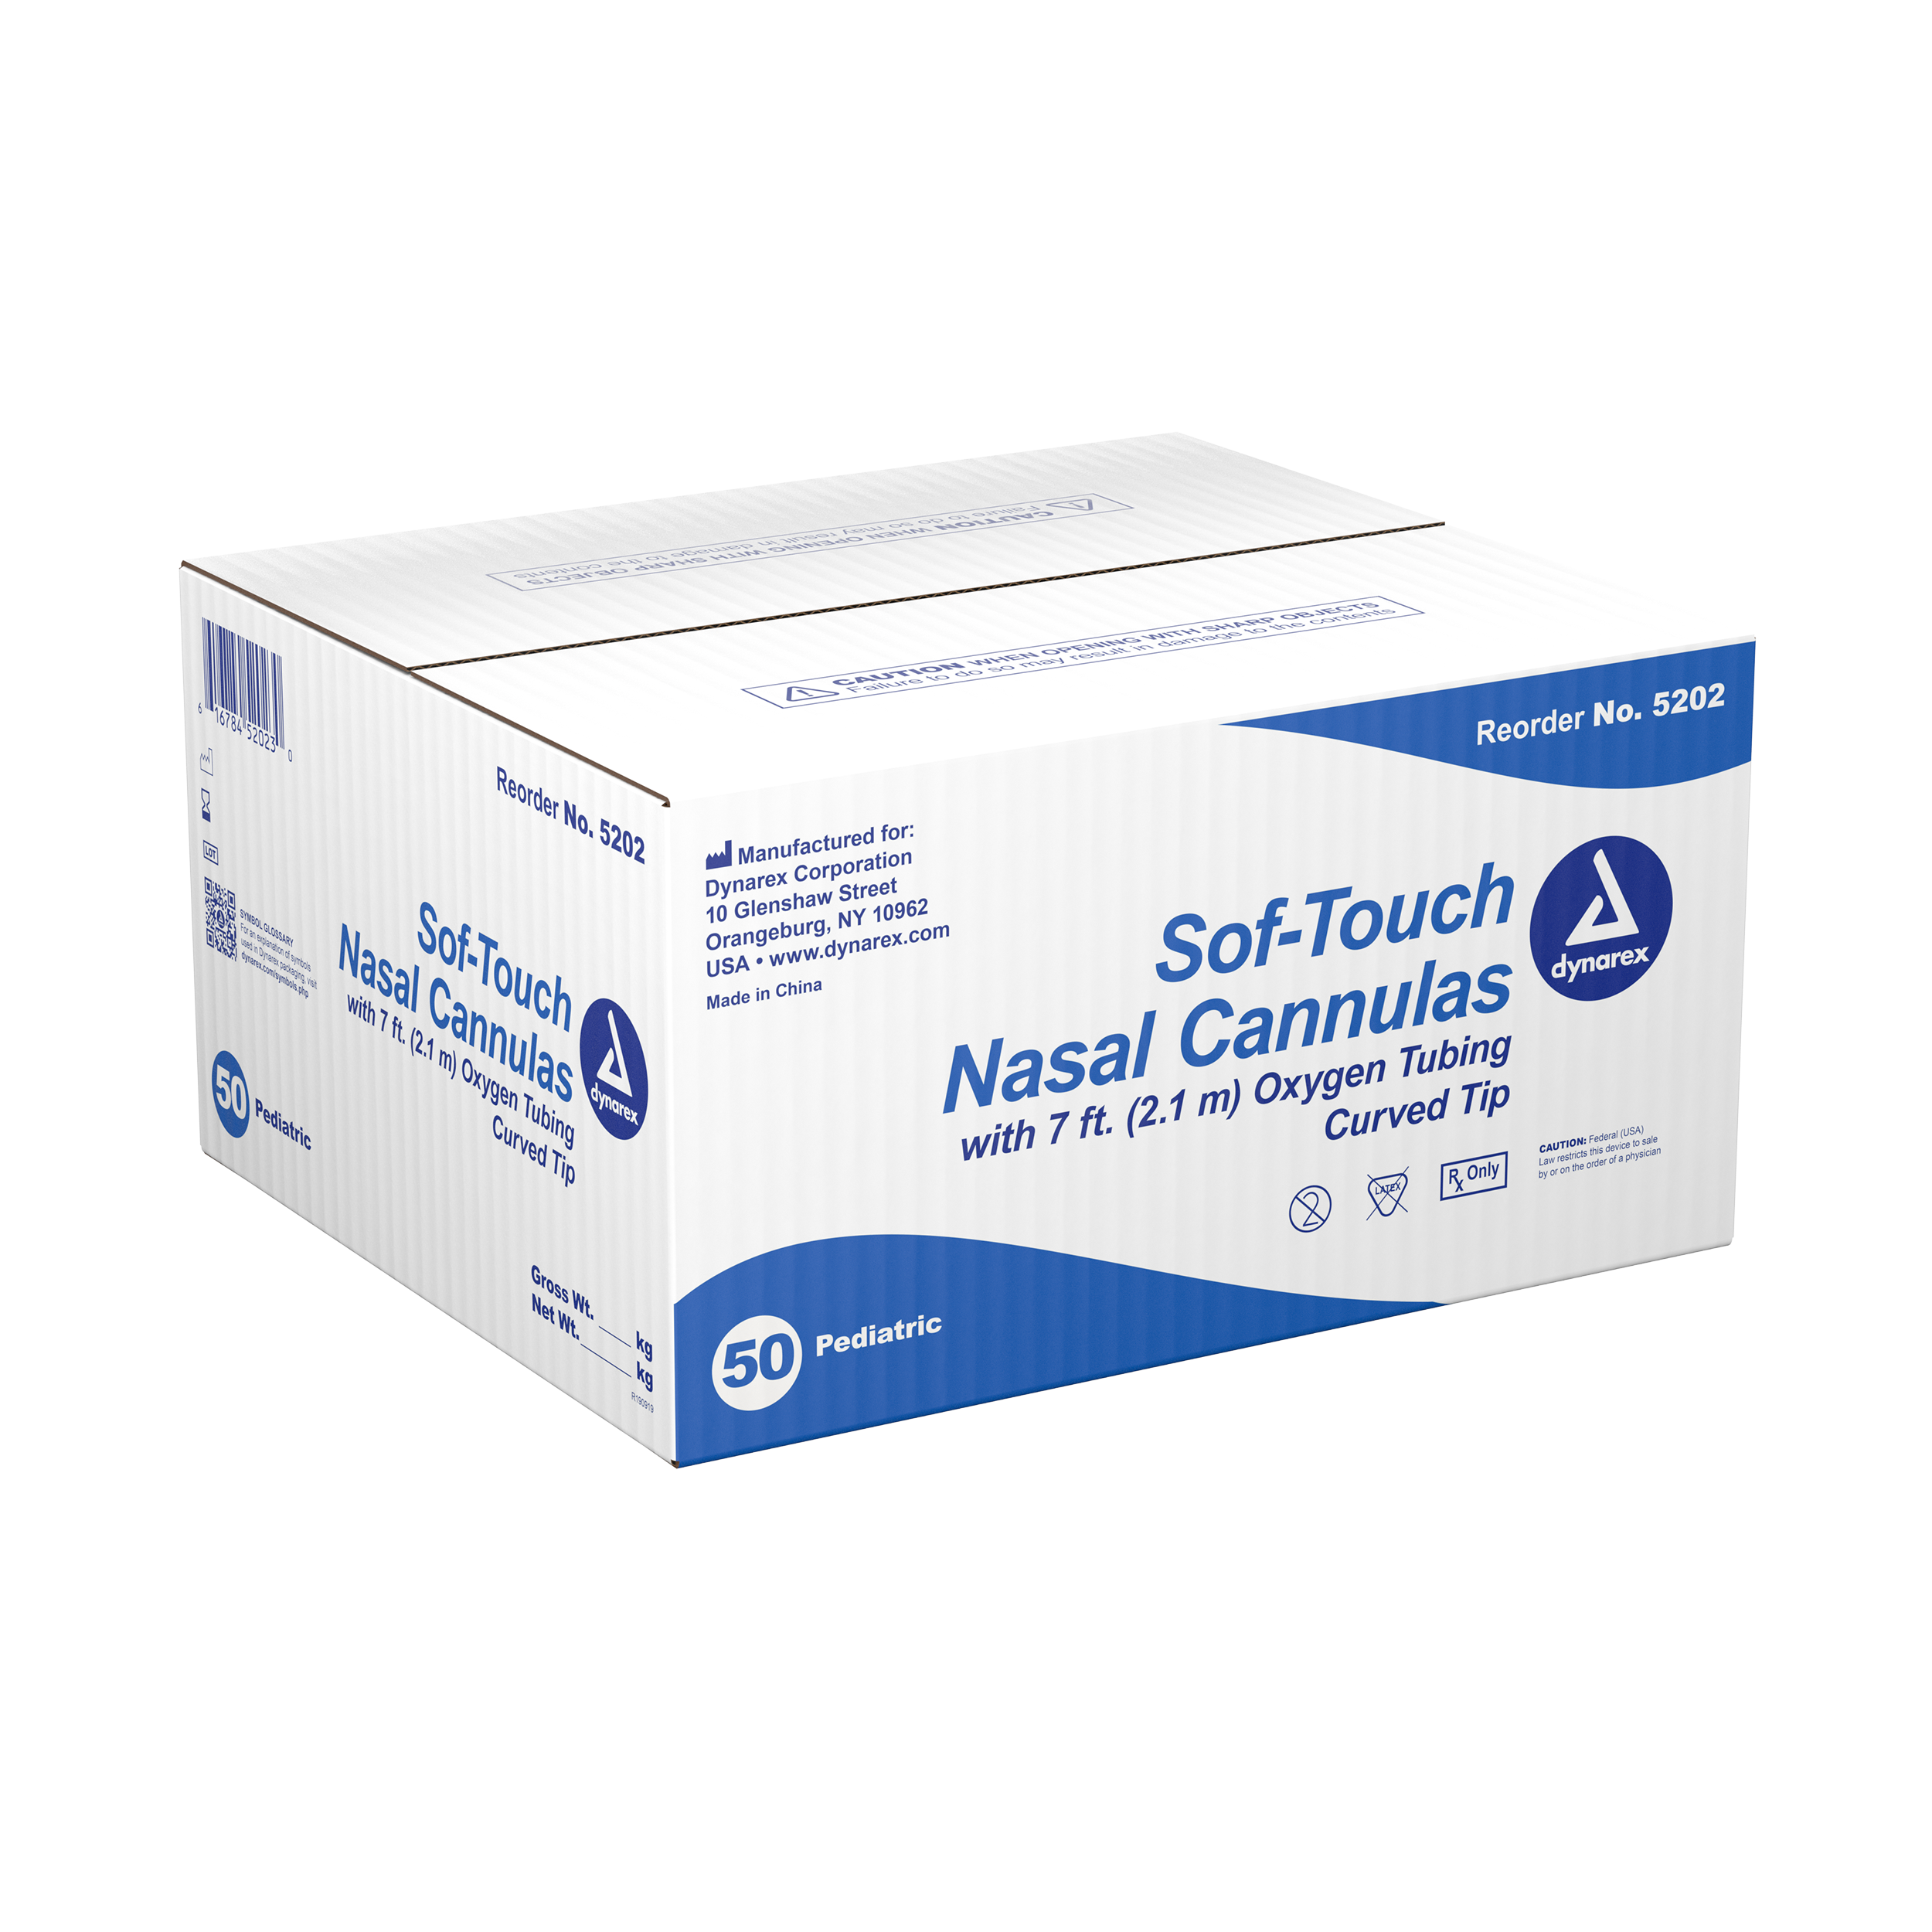 Sof-touch Nasal Cannulas - Pediatric - 7ft Pediatric - 50 Units